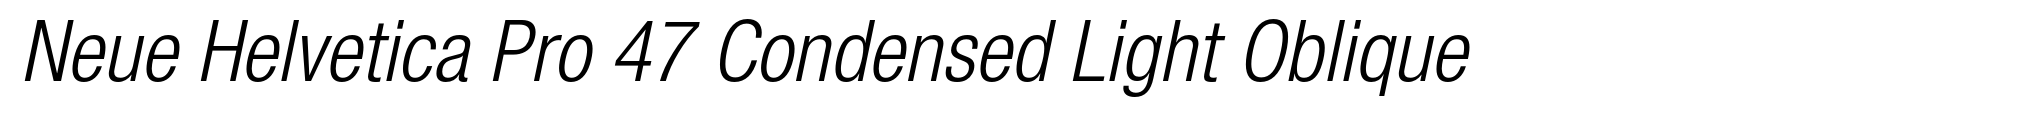 Neue Helvetica Pro 47 Condensed Light Oblique image